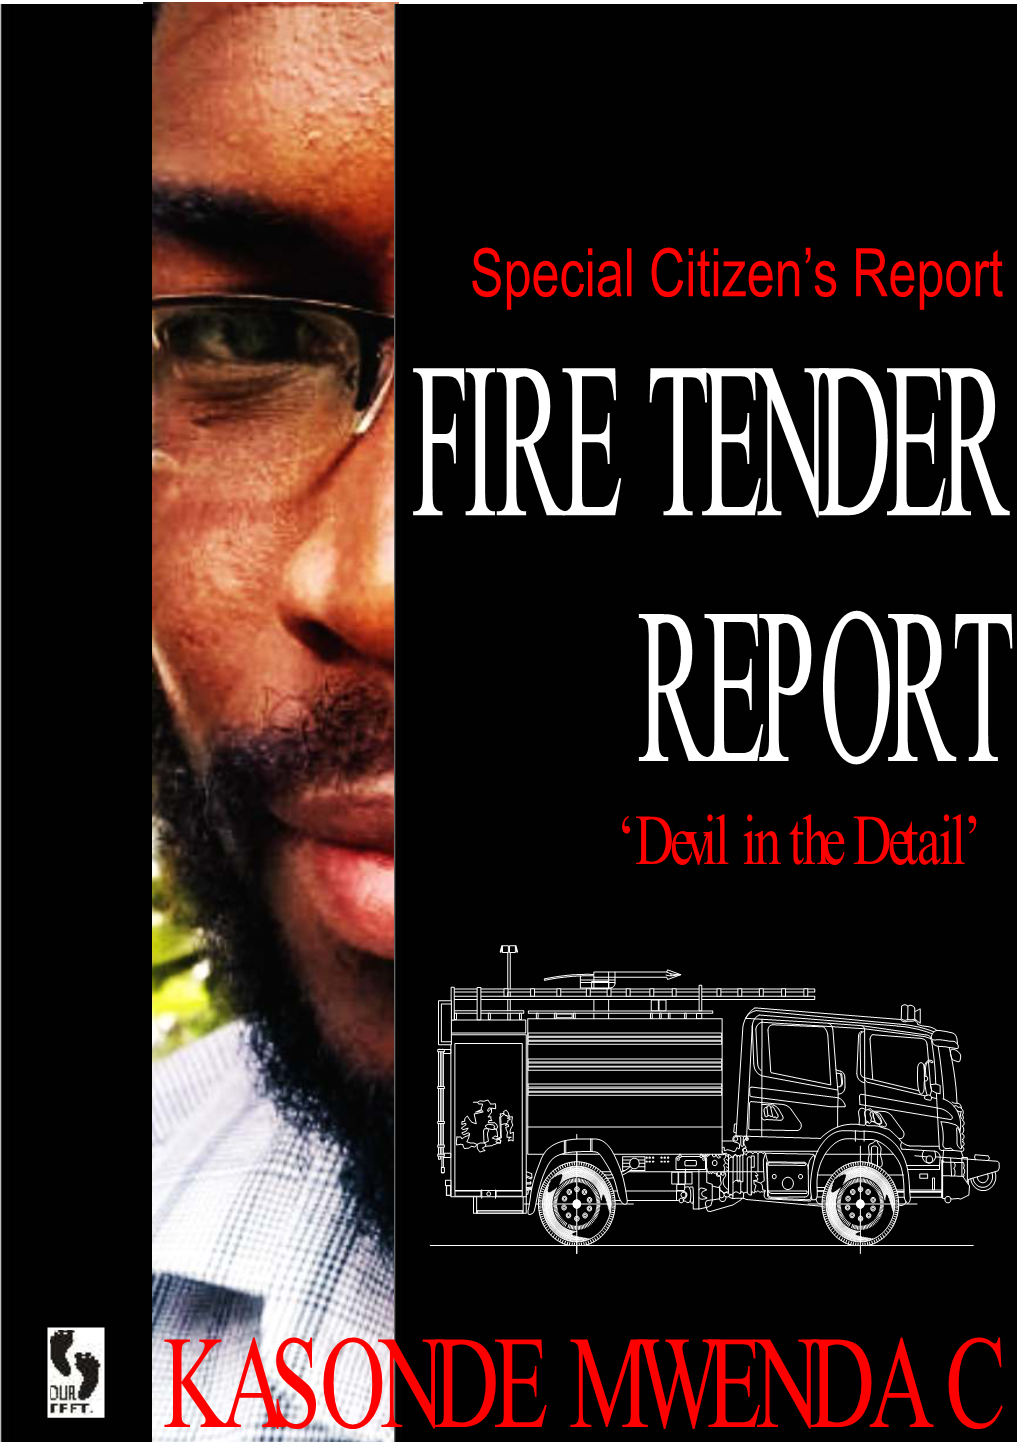 FIRE TENDER REPORT ‘Devil in the Detail’